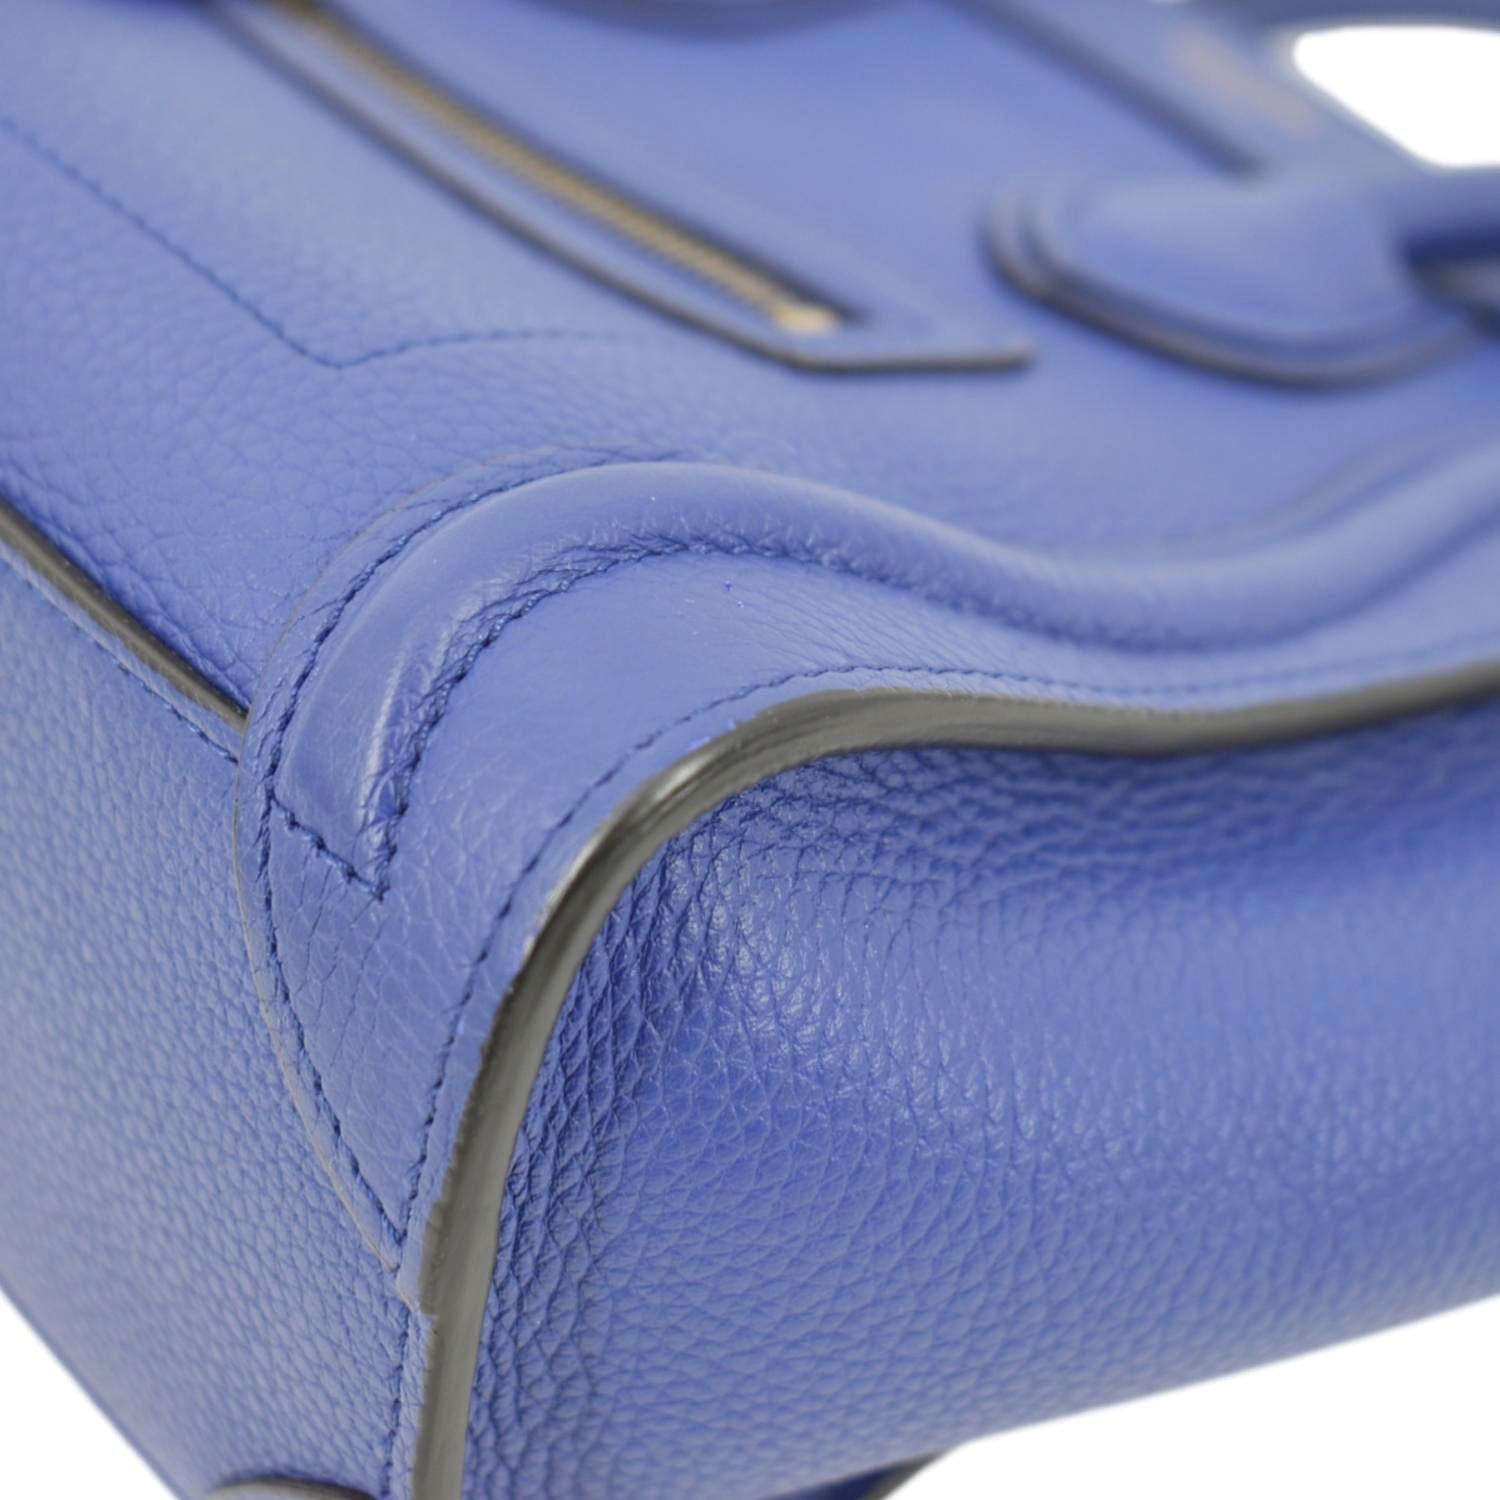 Celine Nano Luggage Crossbody Bag in Blue/Grey - A World Of Goods